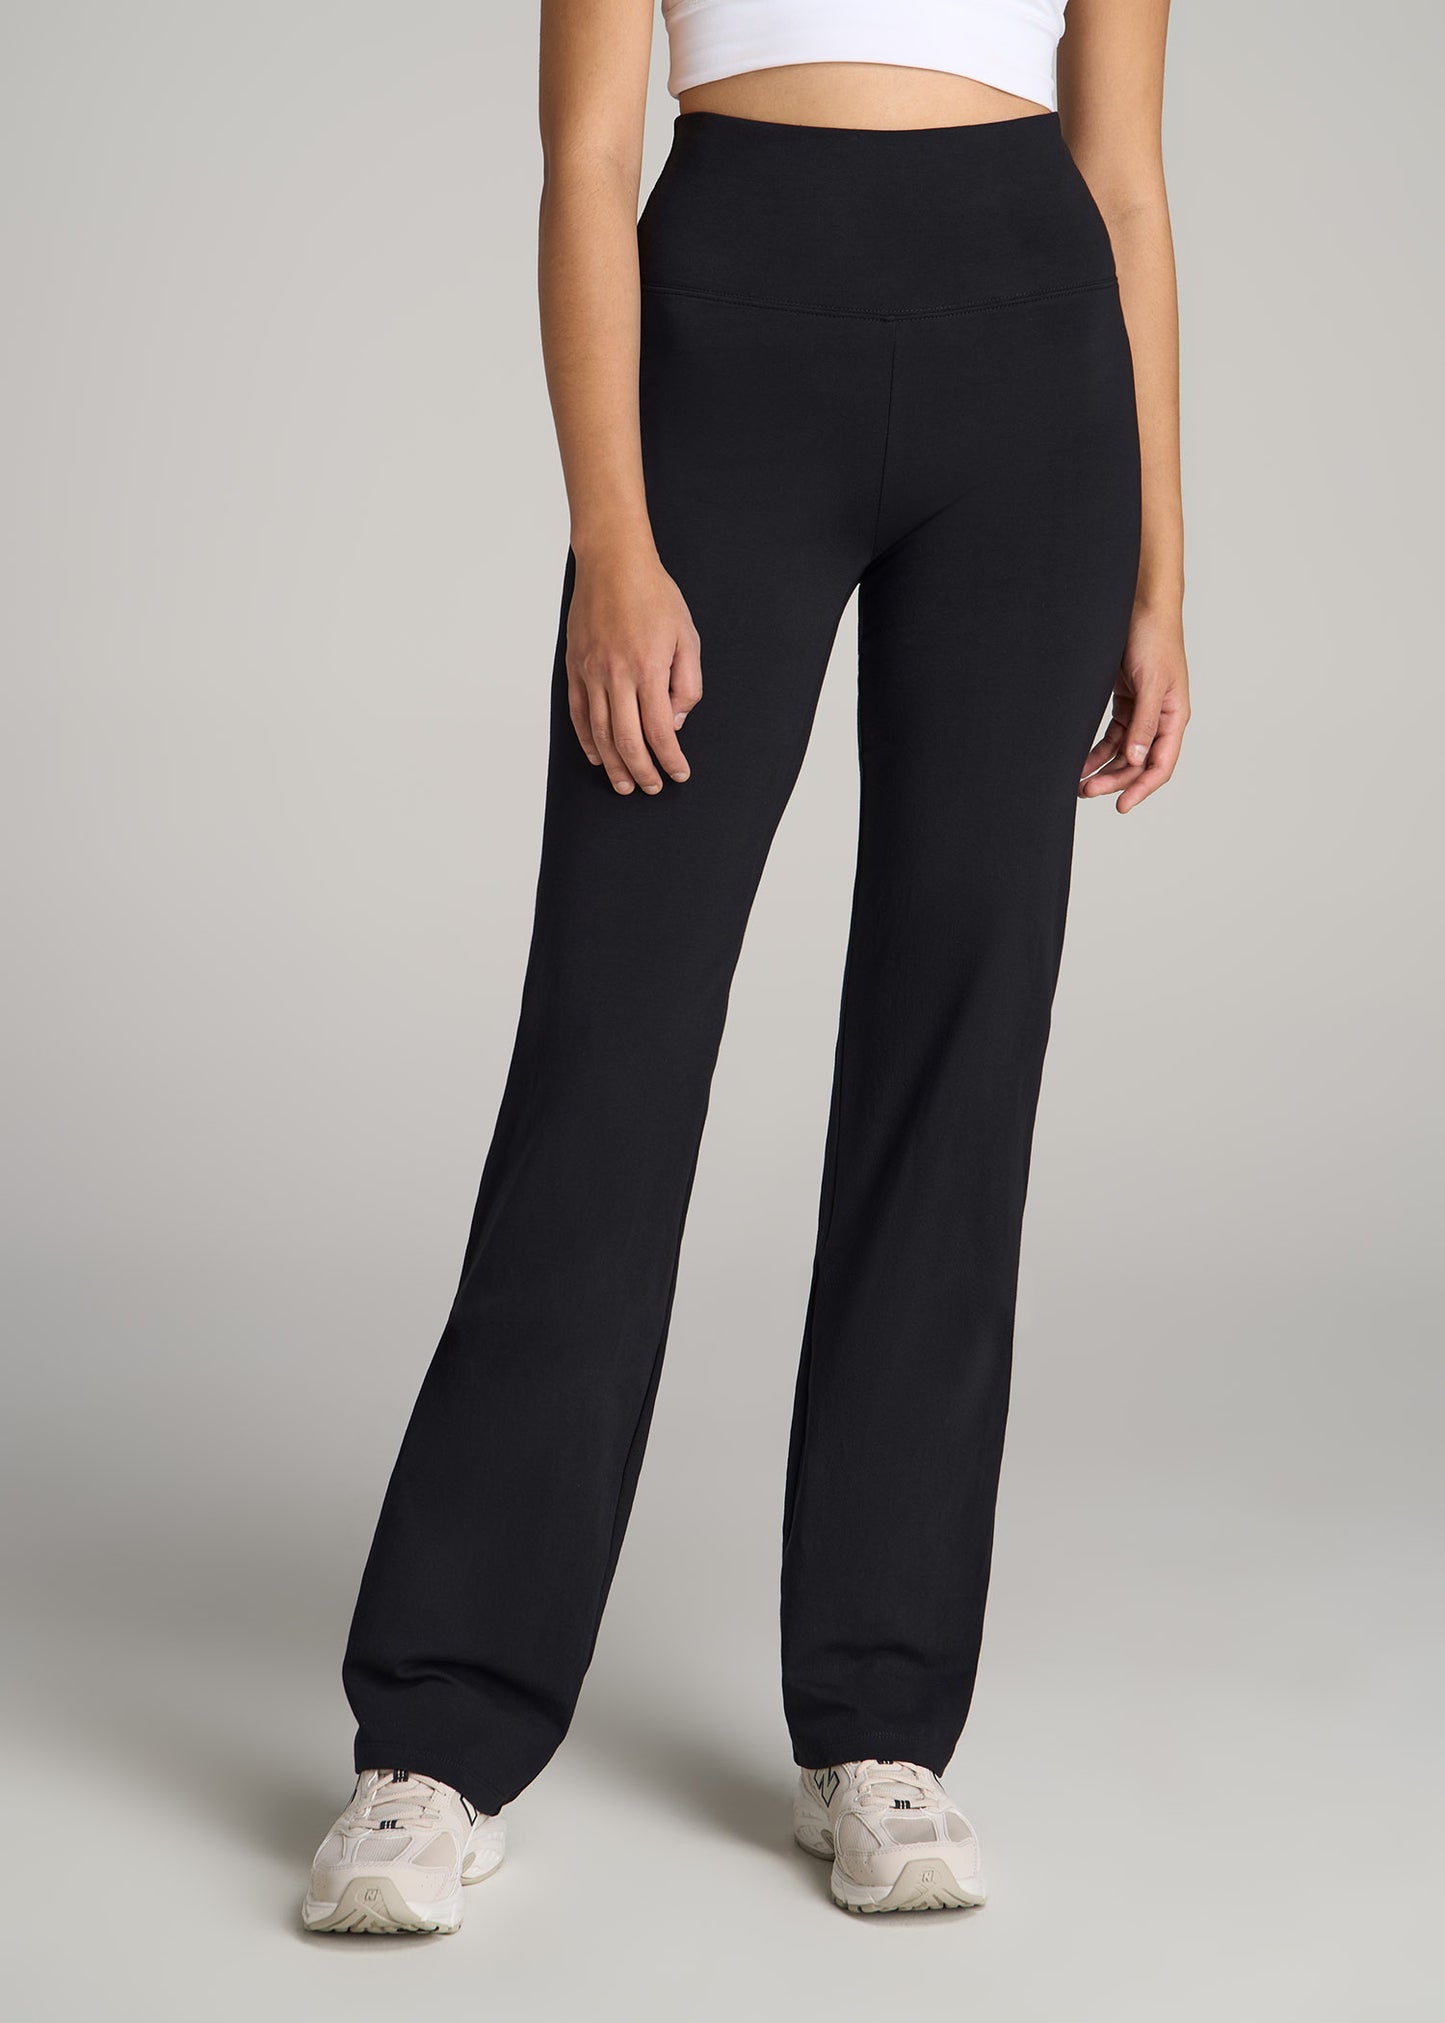  Side Pockets,Tall Womens Straight Leg Yoga Pants Slim Fit Workout  Pants,35,Black,XL